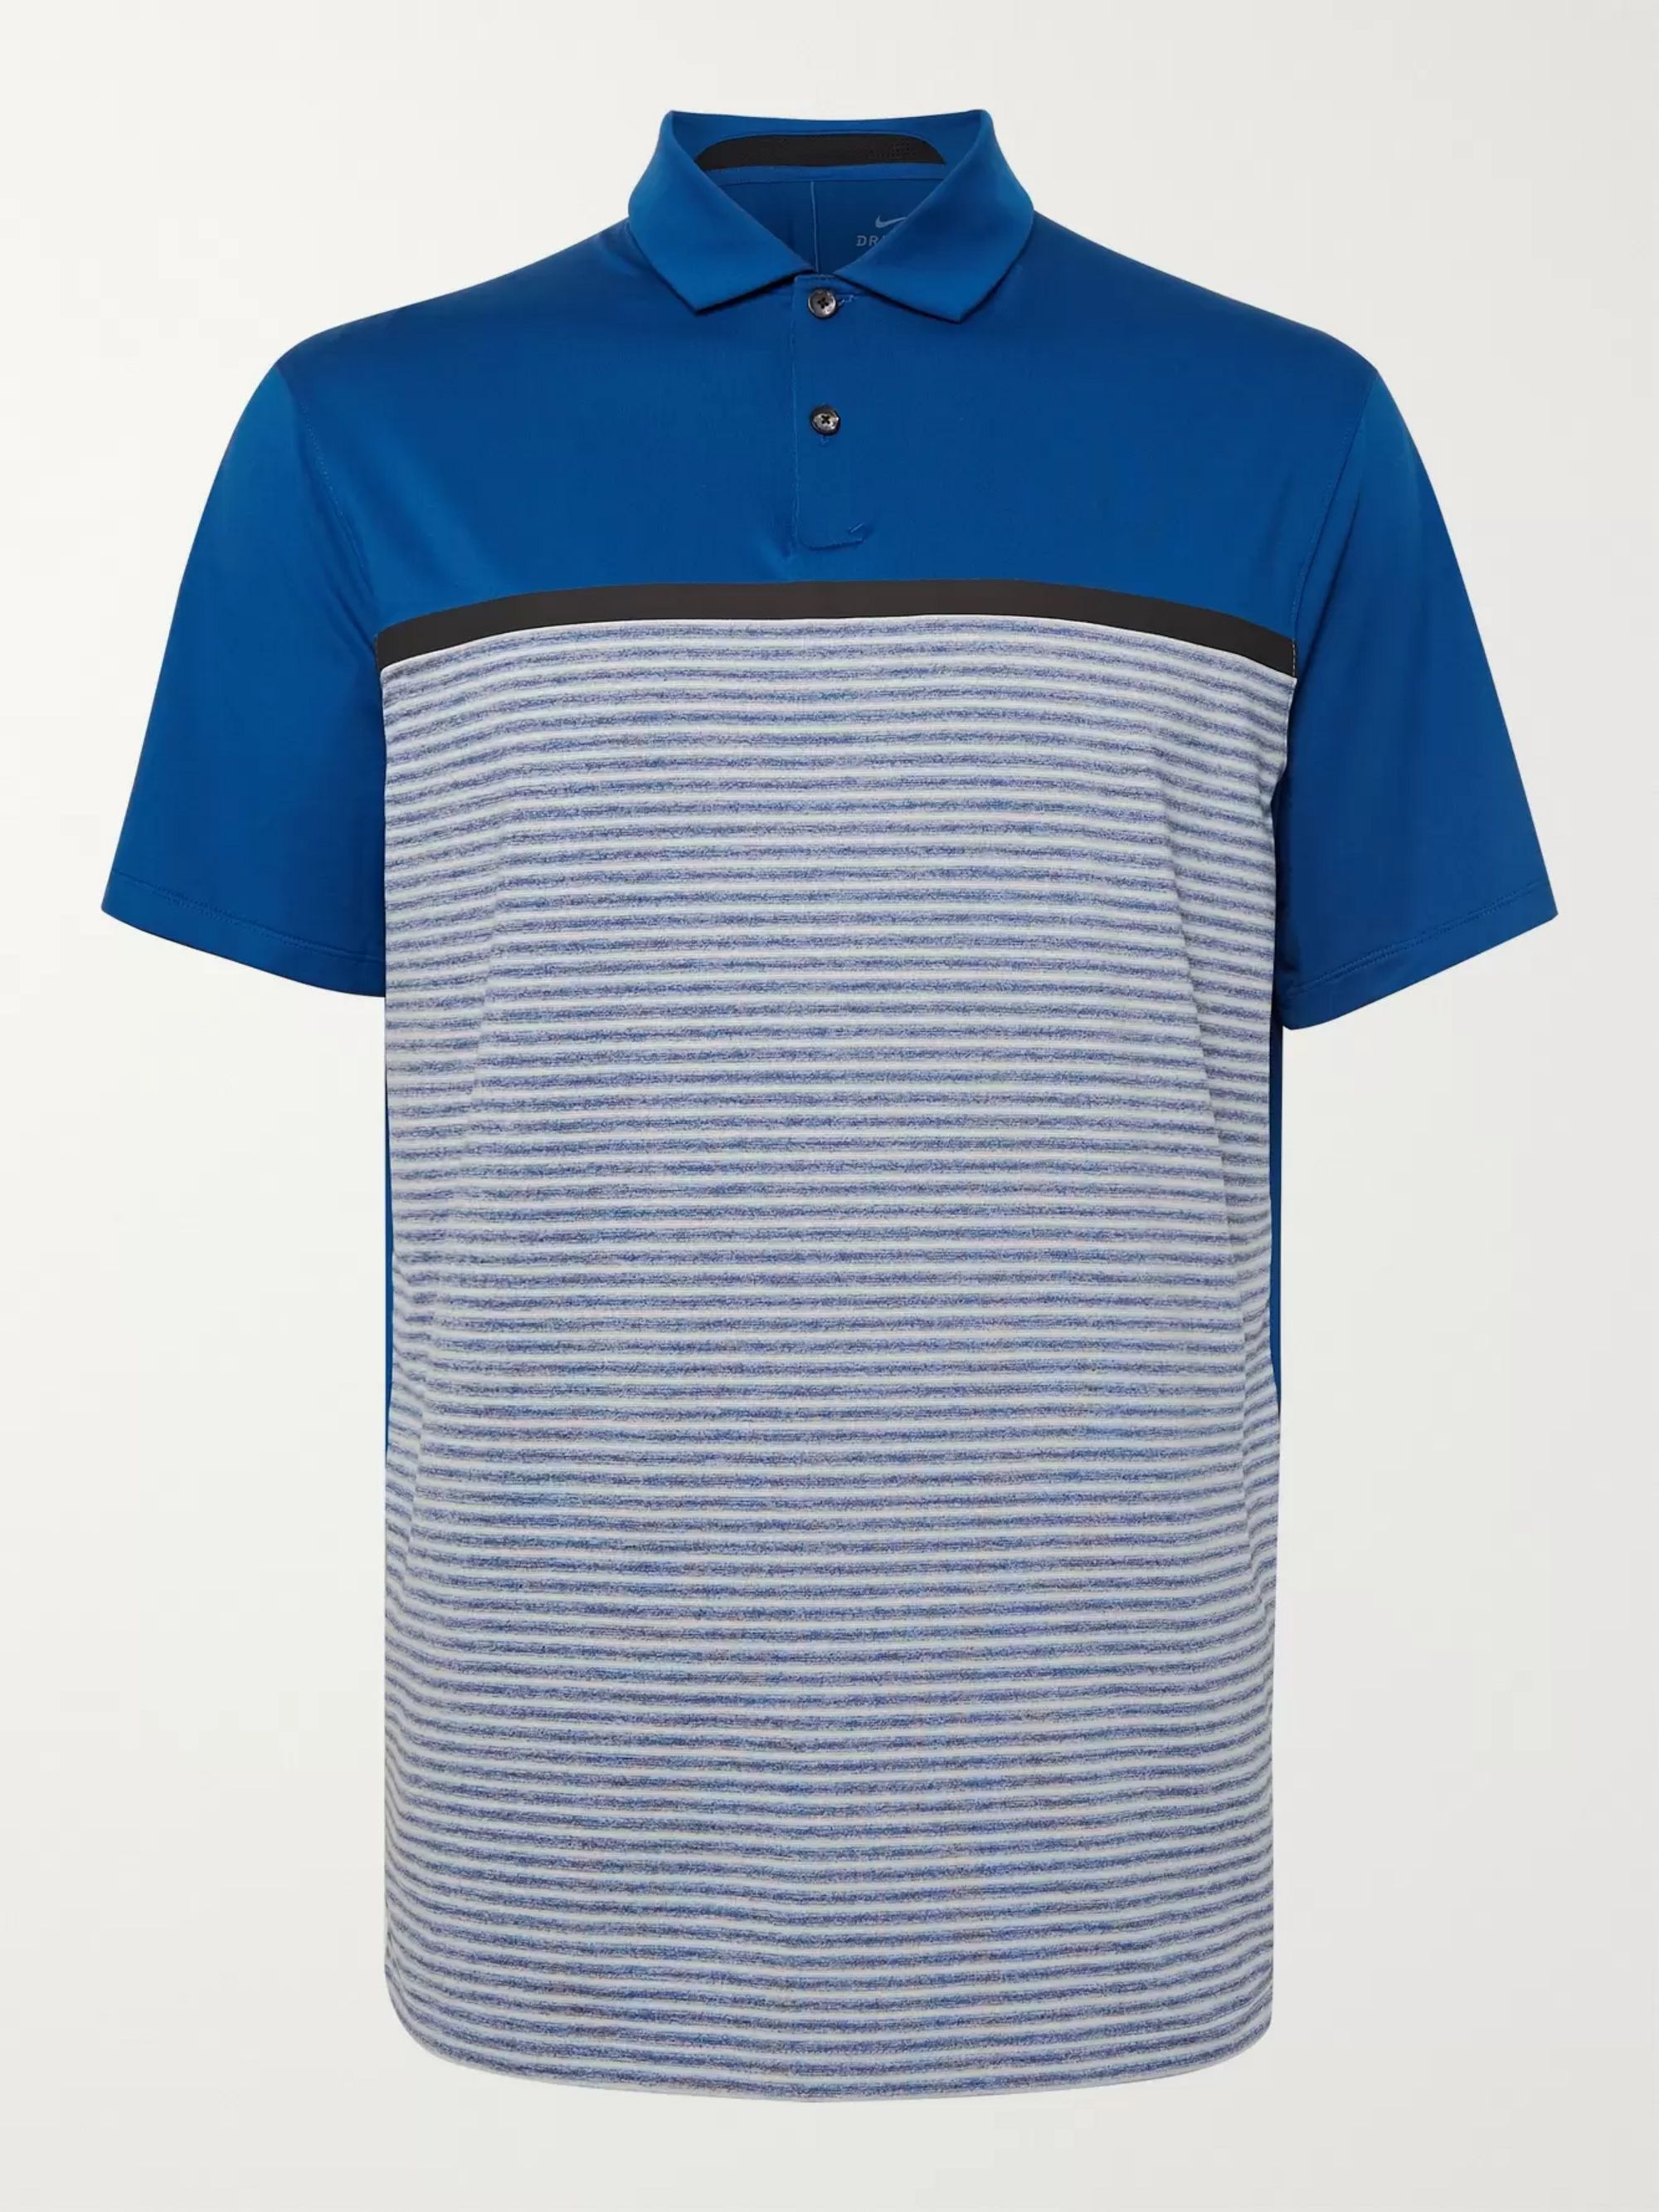 Nike Masters Golf Shirts Clearance, SAVE 46% riad-dar-haven.com